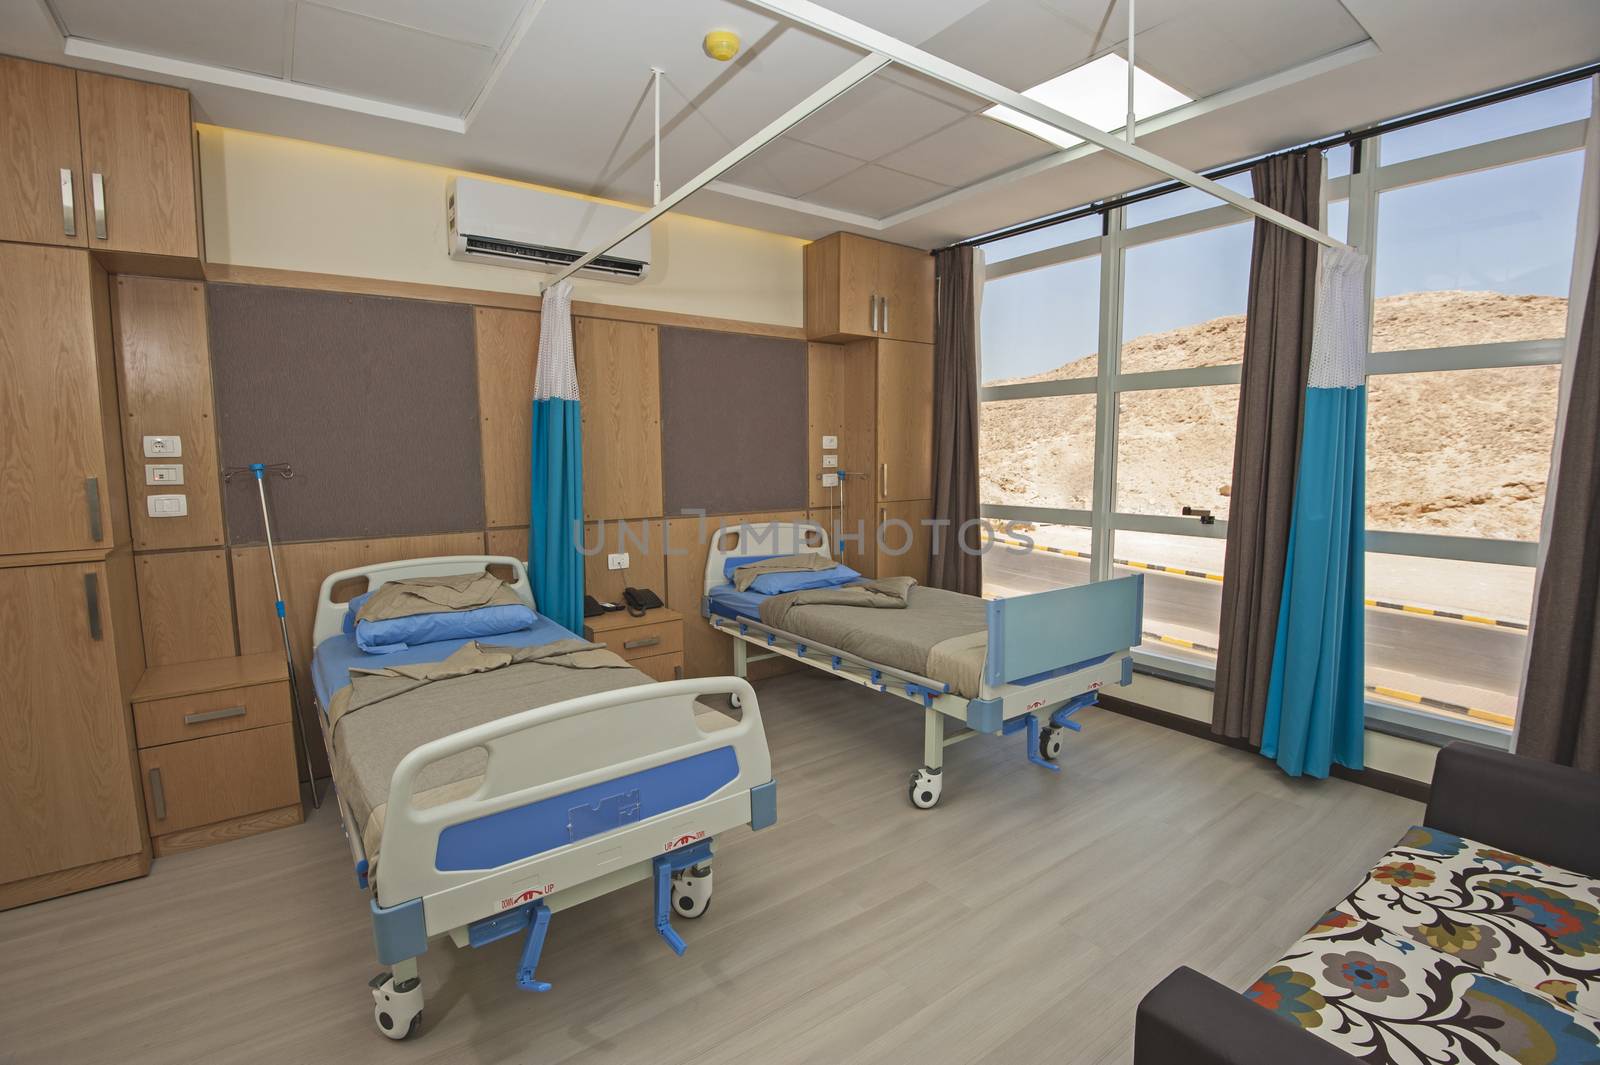 Beds in a hospital ward by paulvinten